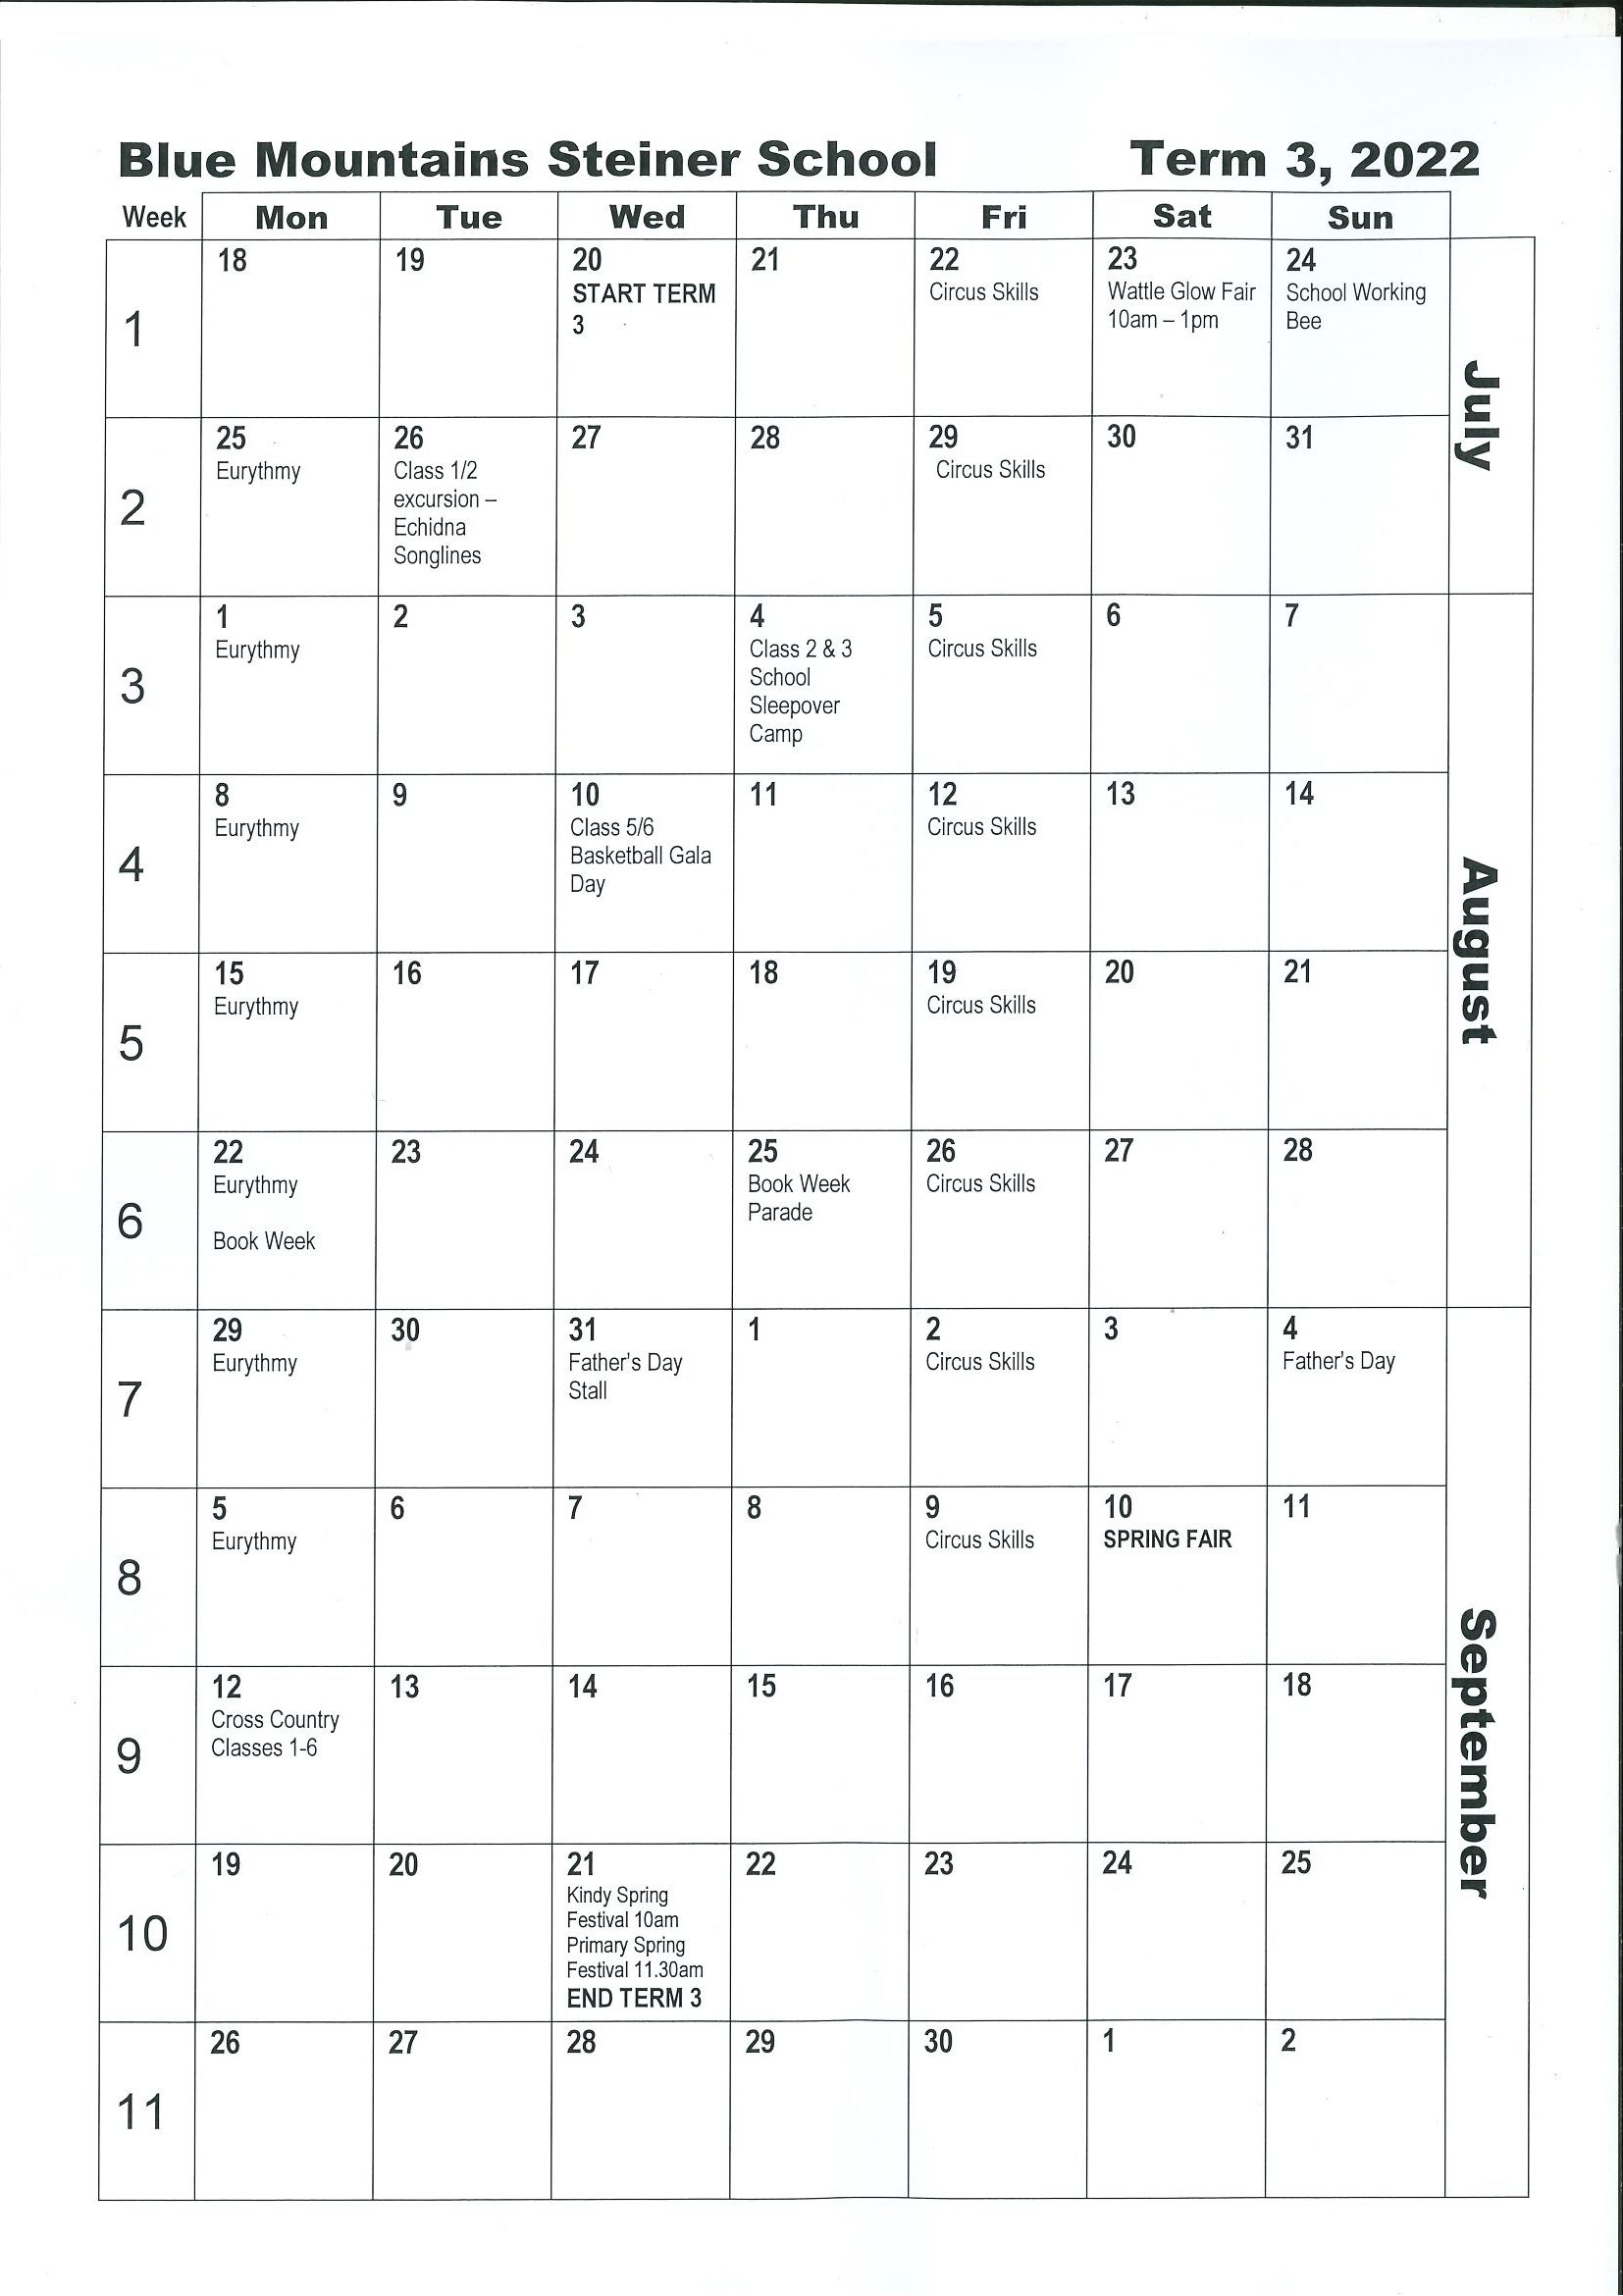 NSW Blue Mountains Steiner School calendar for Term 3.